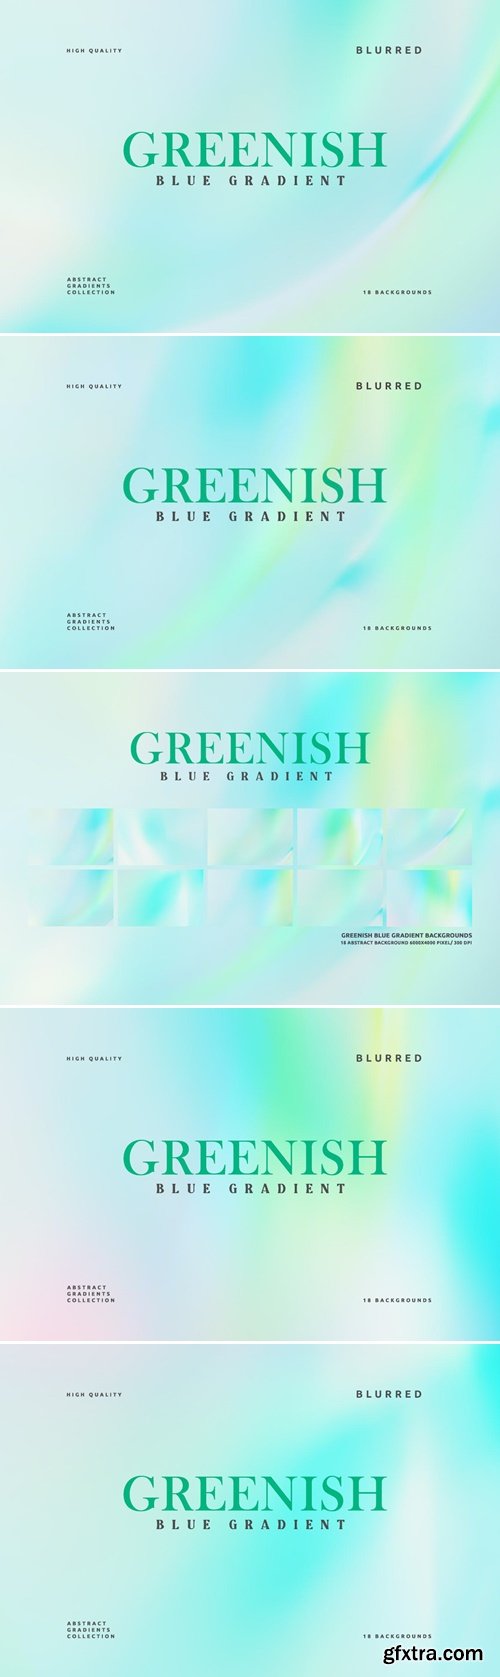 Greenish Blue Gradient Backgrounds D39KK2C